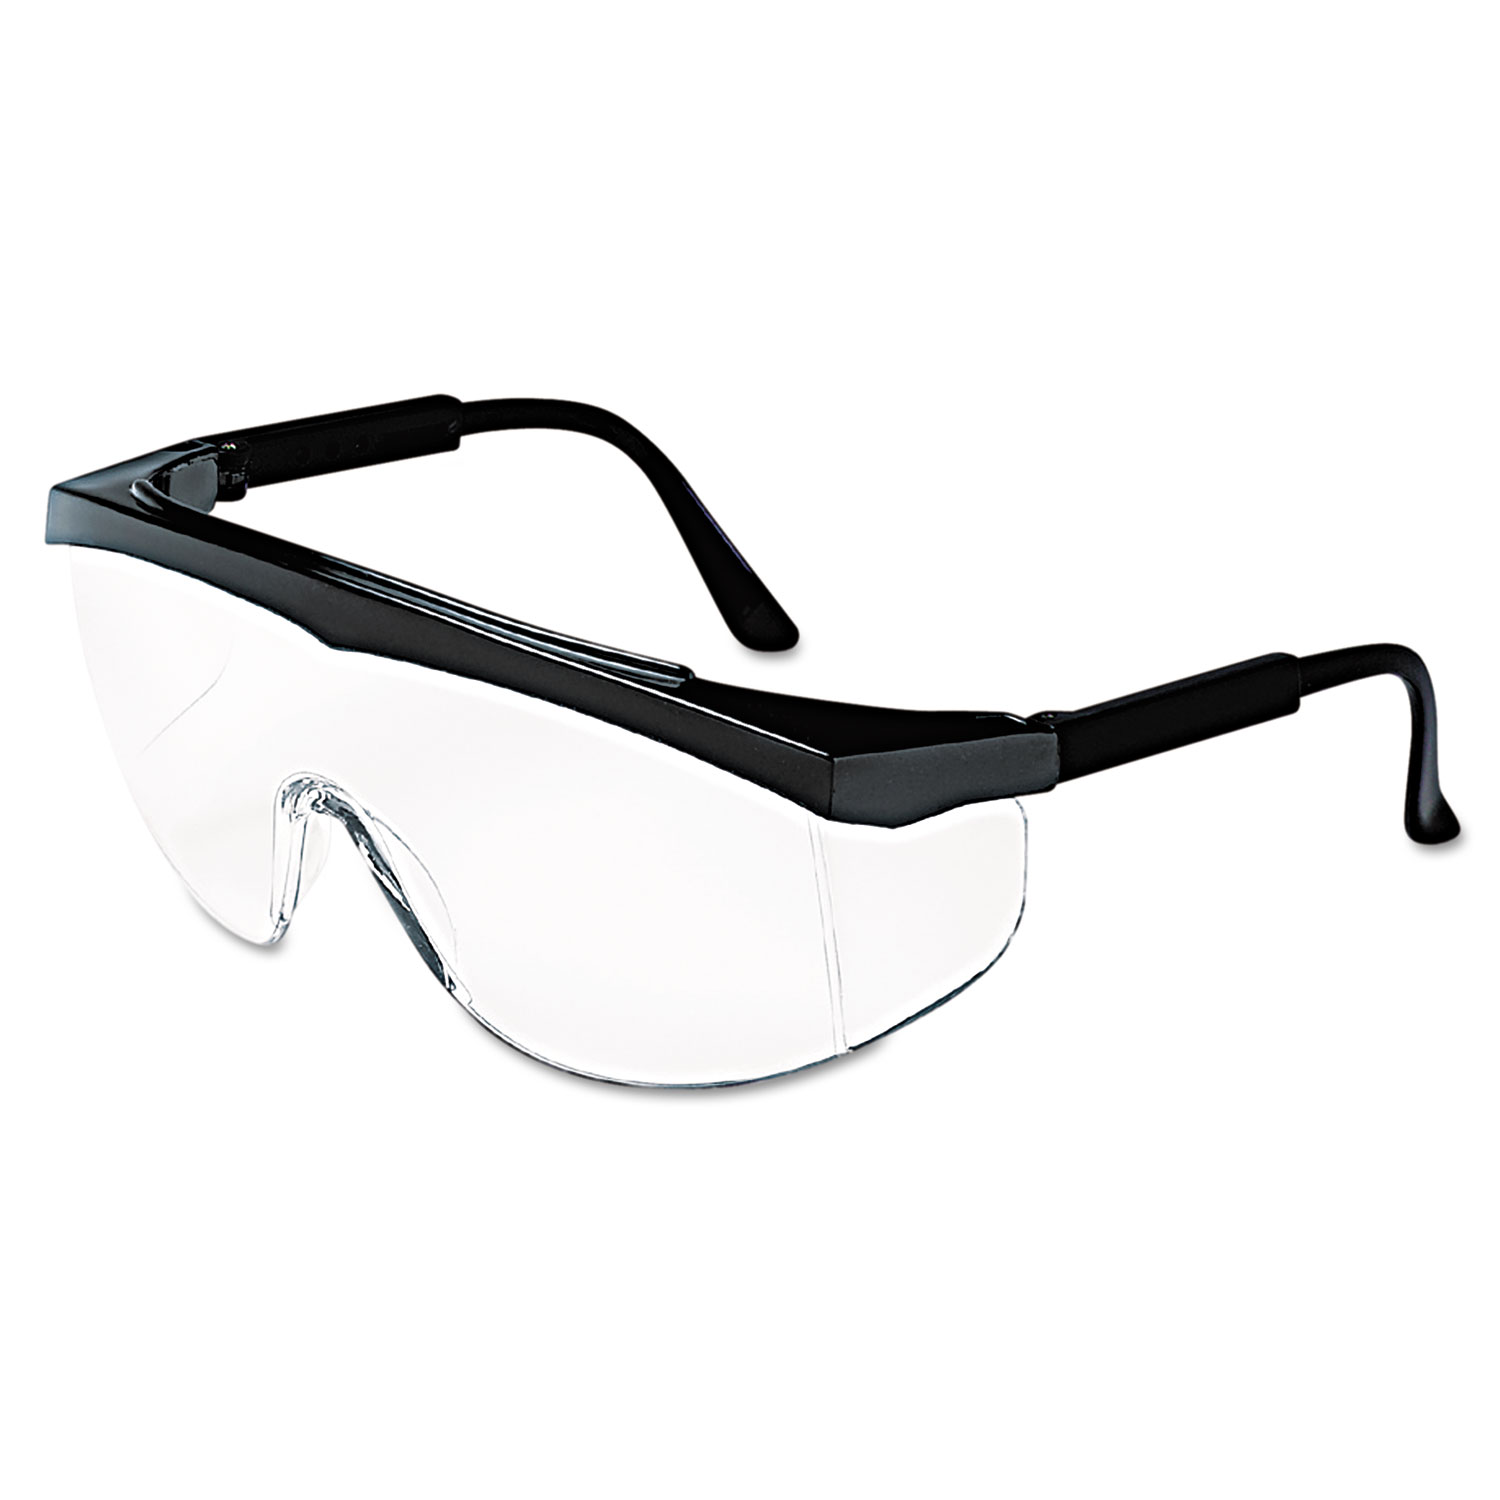 Stratos Safety Glasses, Black Frame, Clear Lens, 12/Box